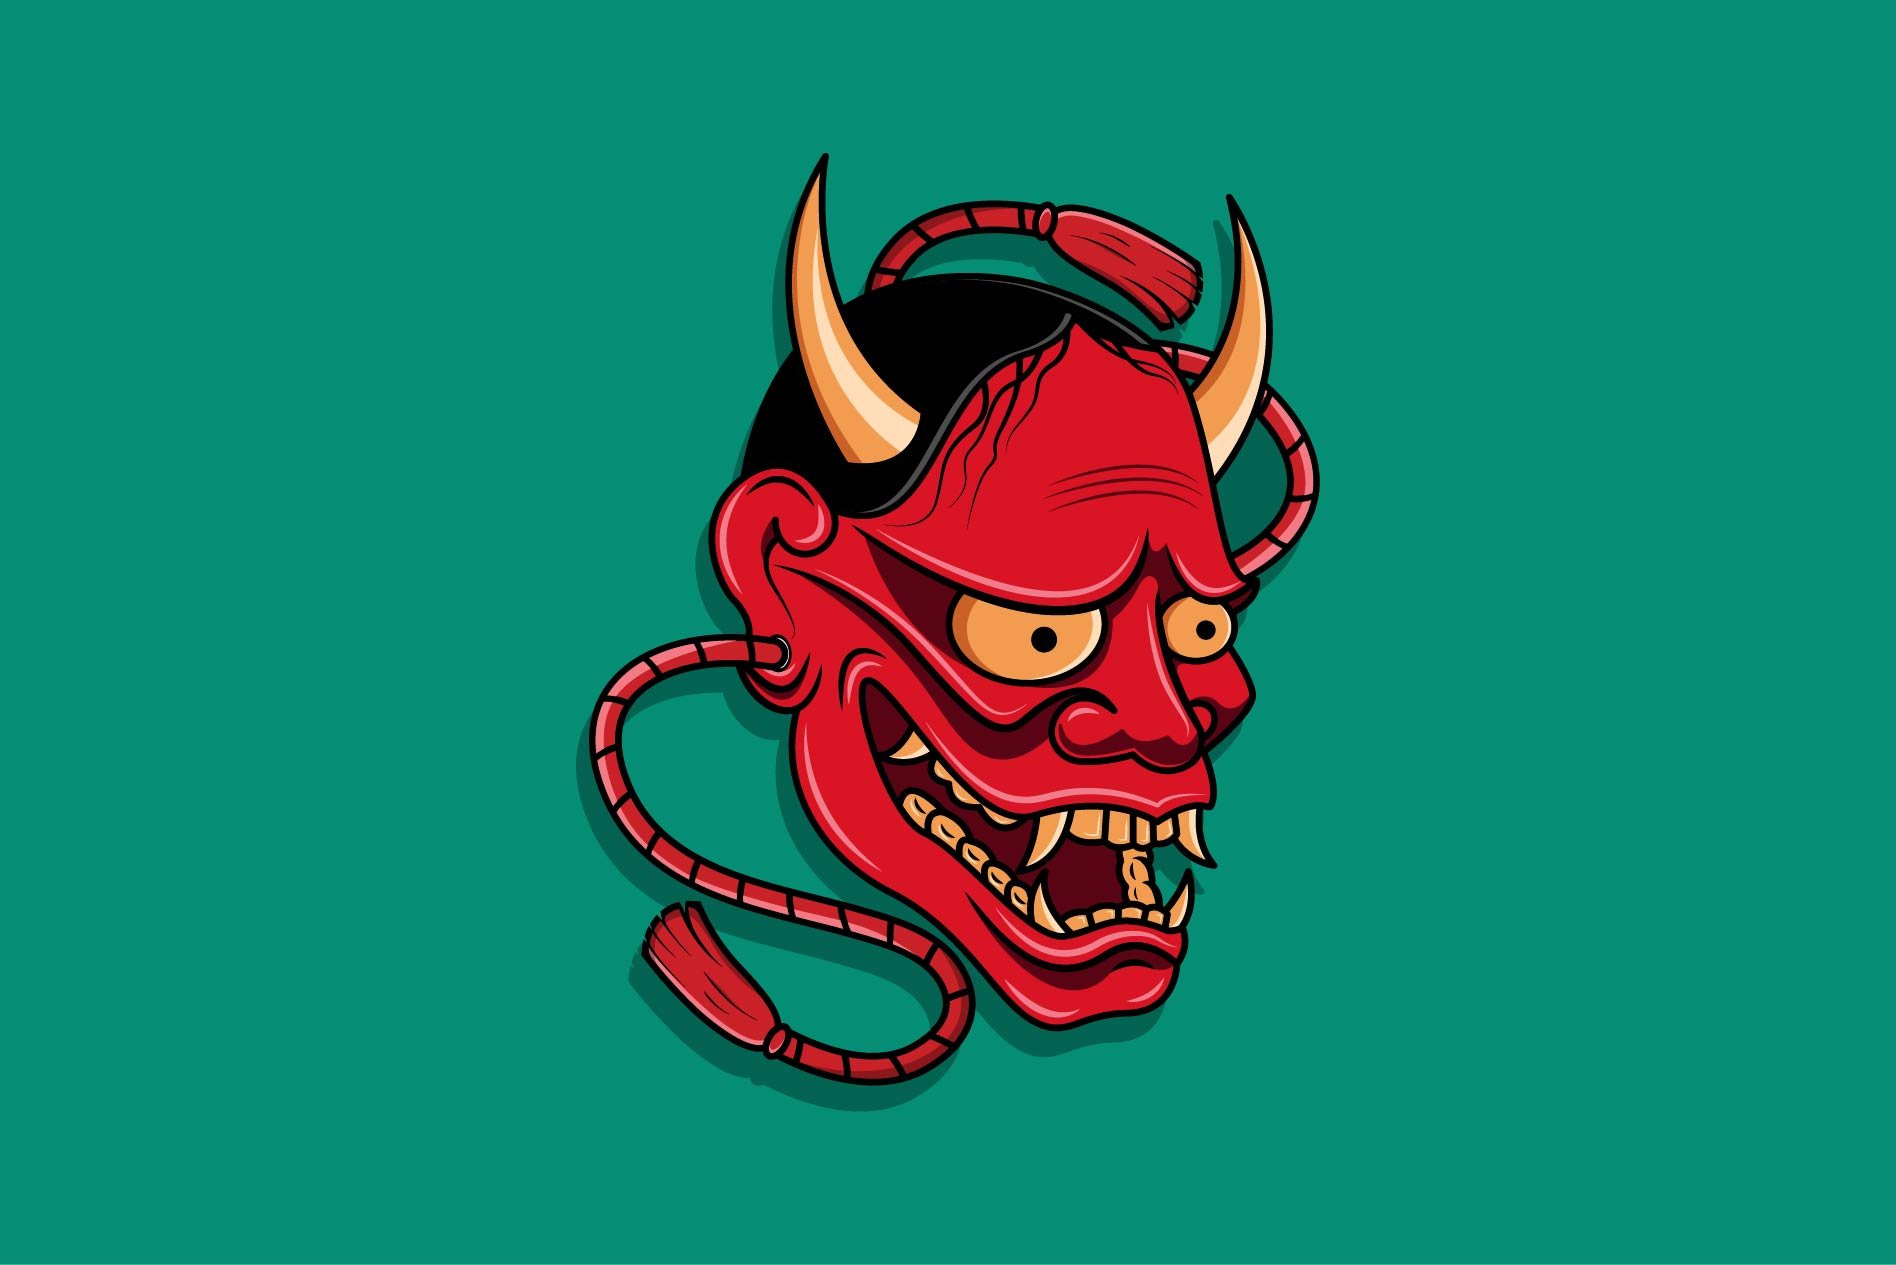 Oni japanese devil mask #26 cover image.